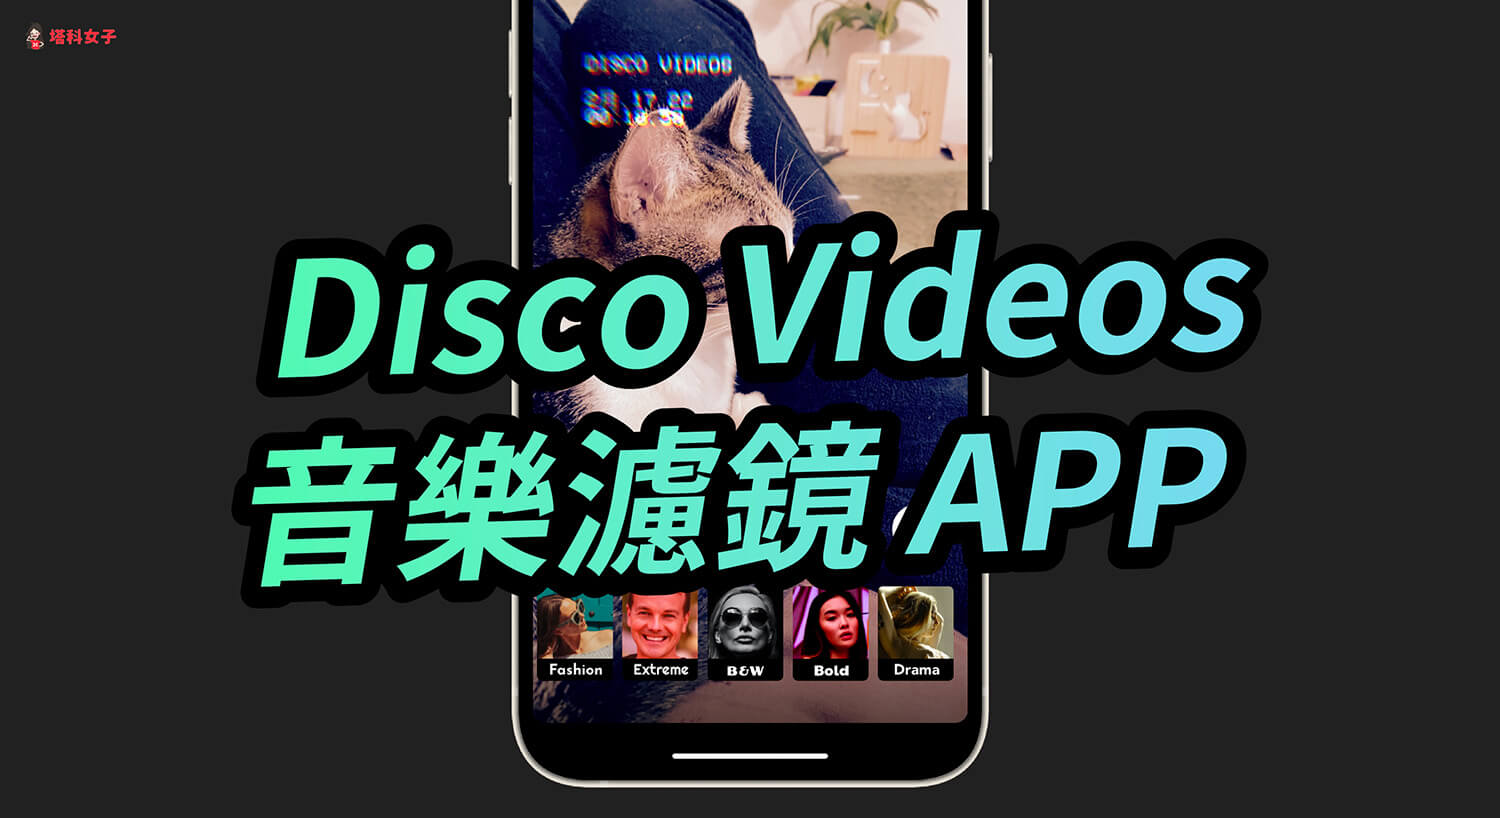 Disco Videos 音樂濾鏡 APP 為 Vlog 影片加上音樂、濾鏡及特效